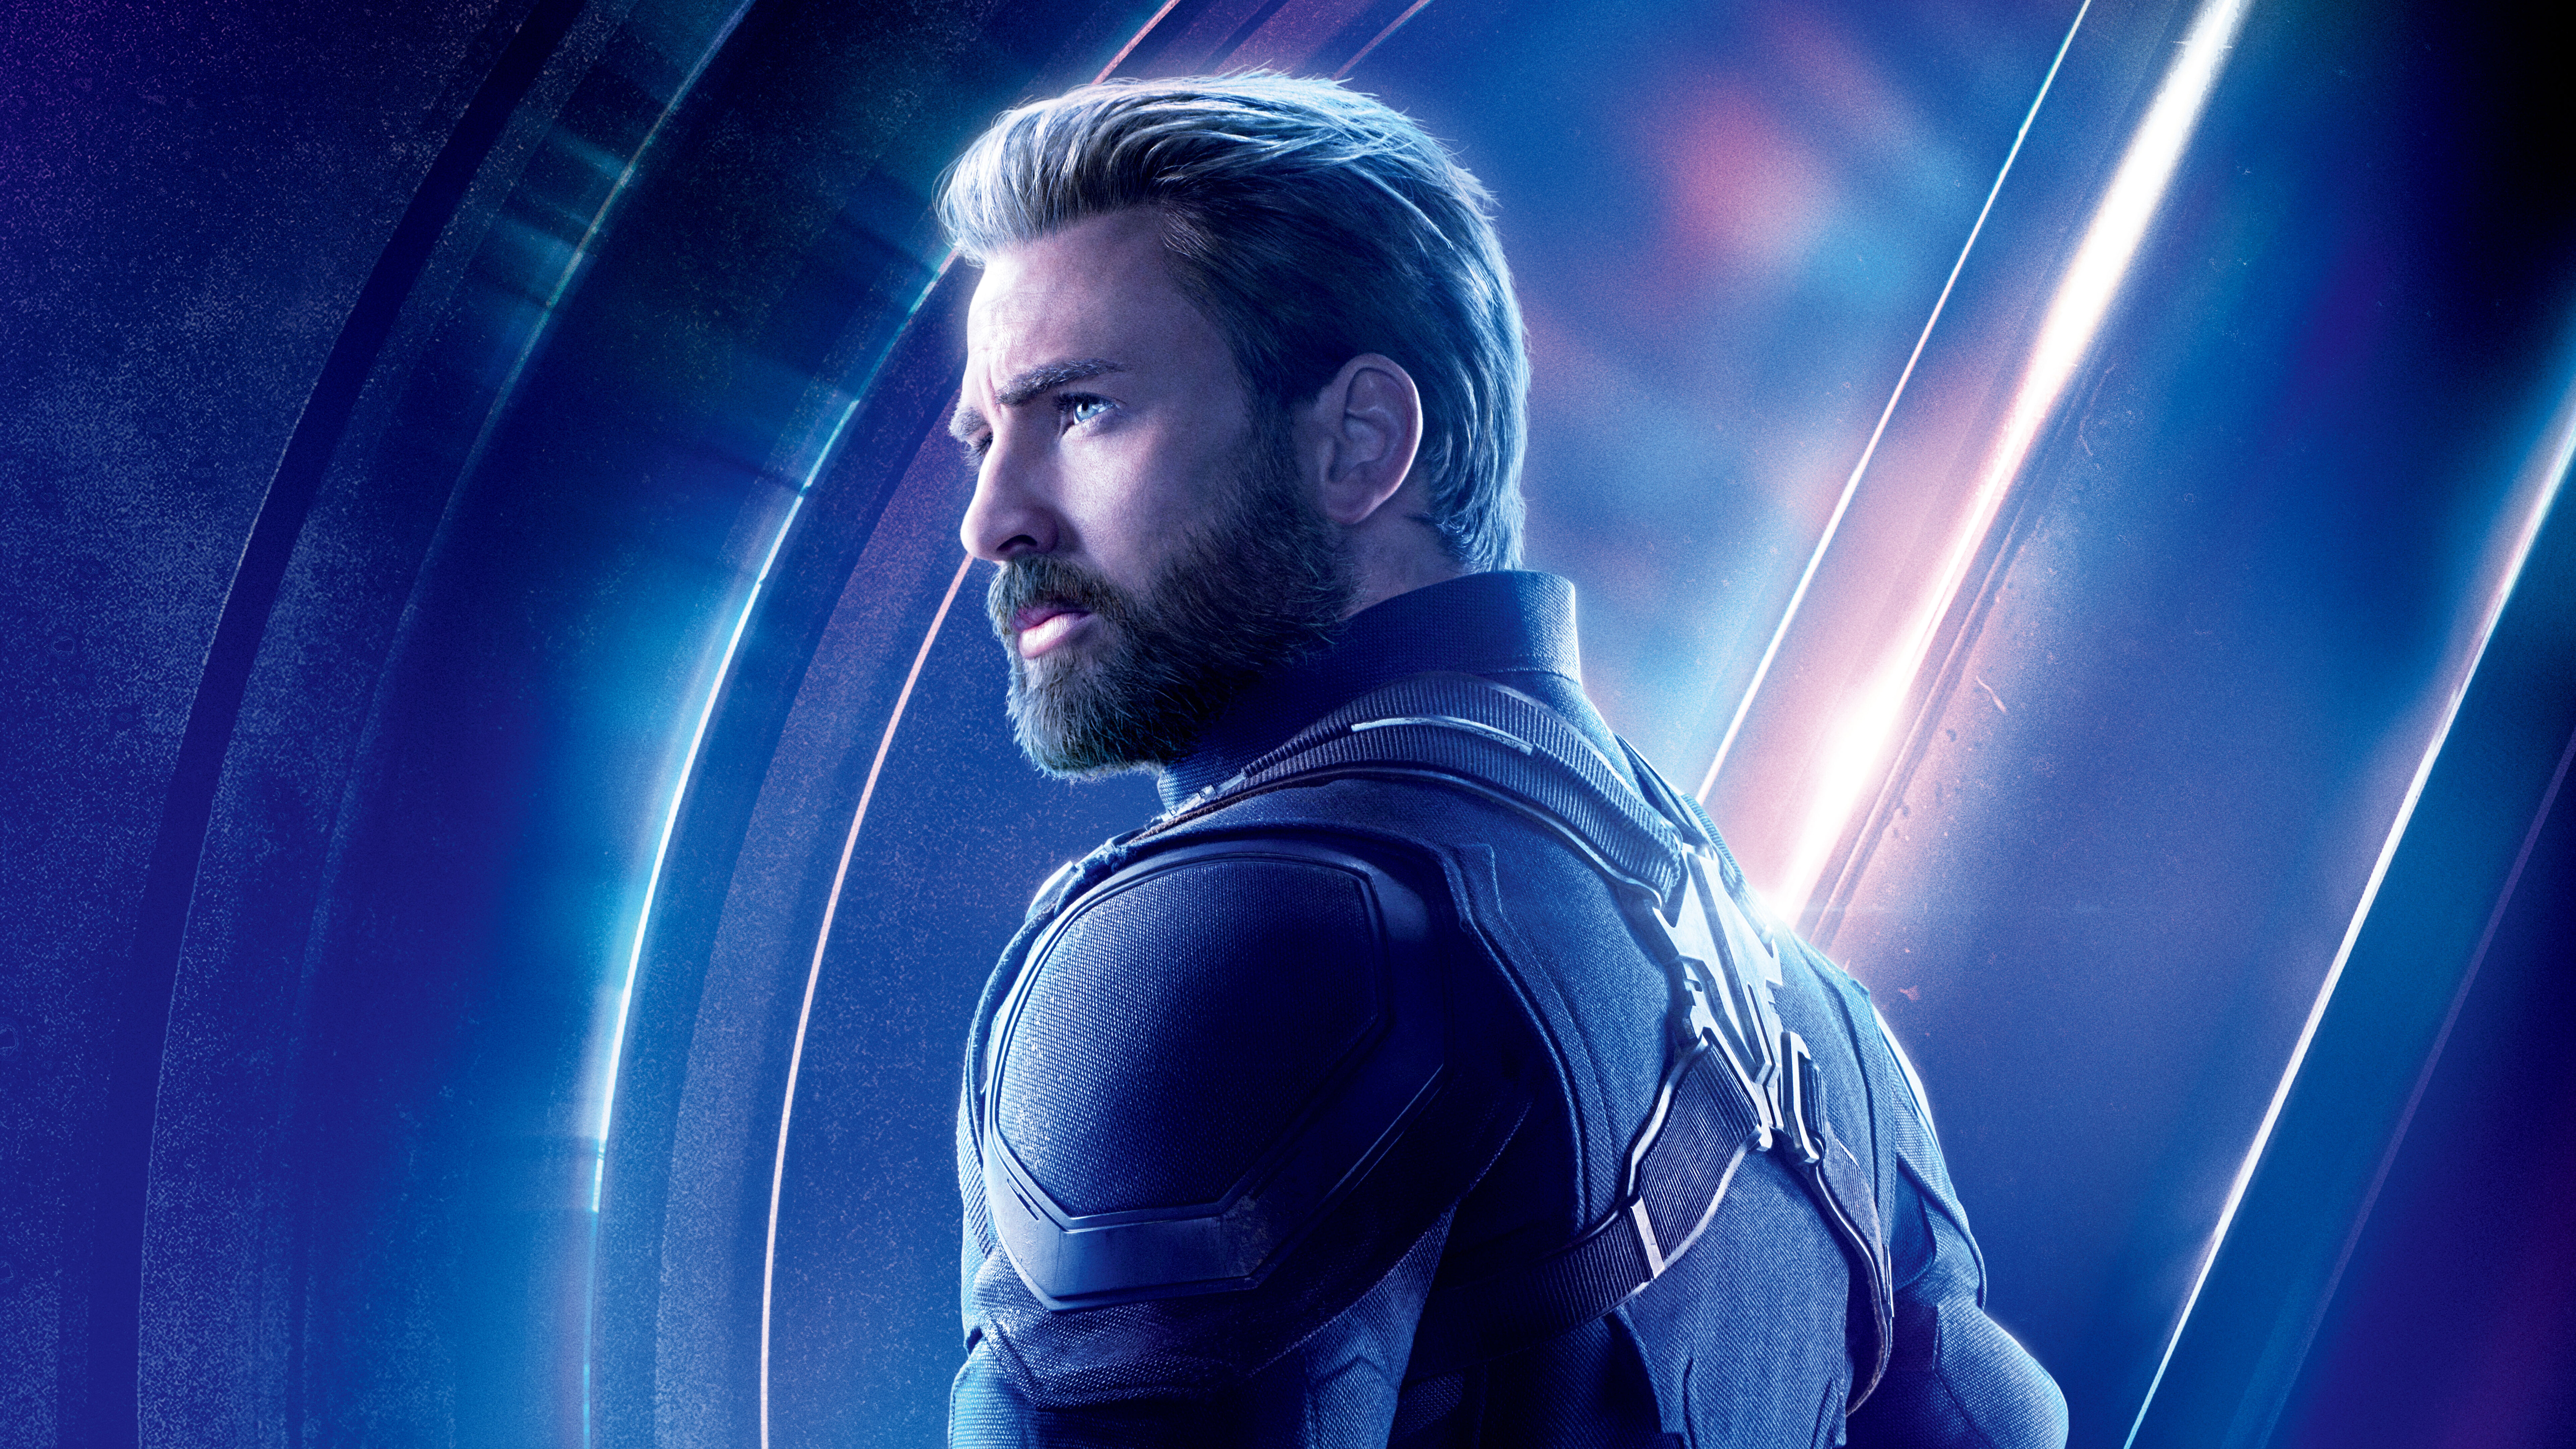 7680x4320 Captain America In Avengers Infinity War 8k Poster